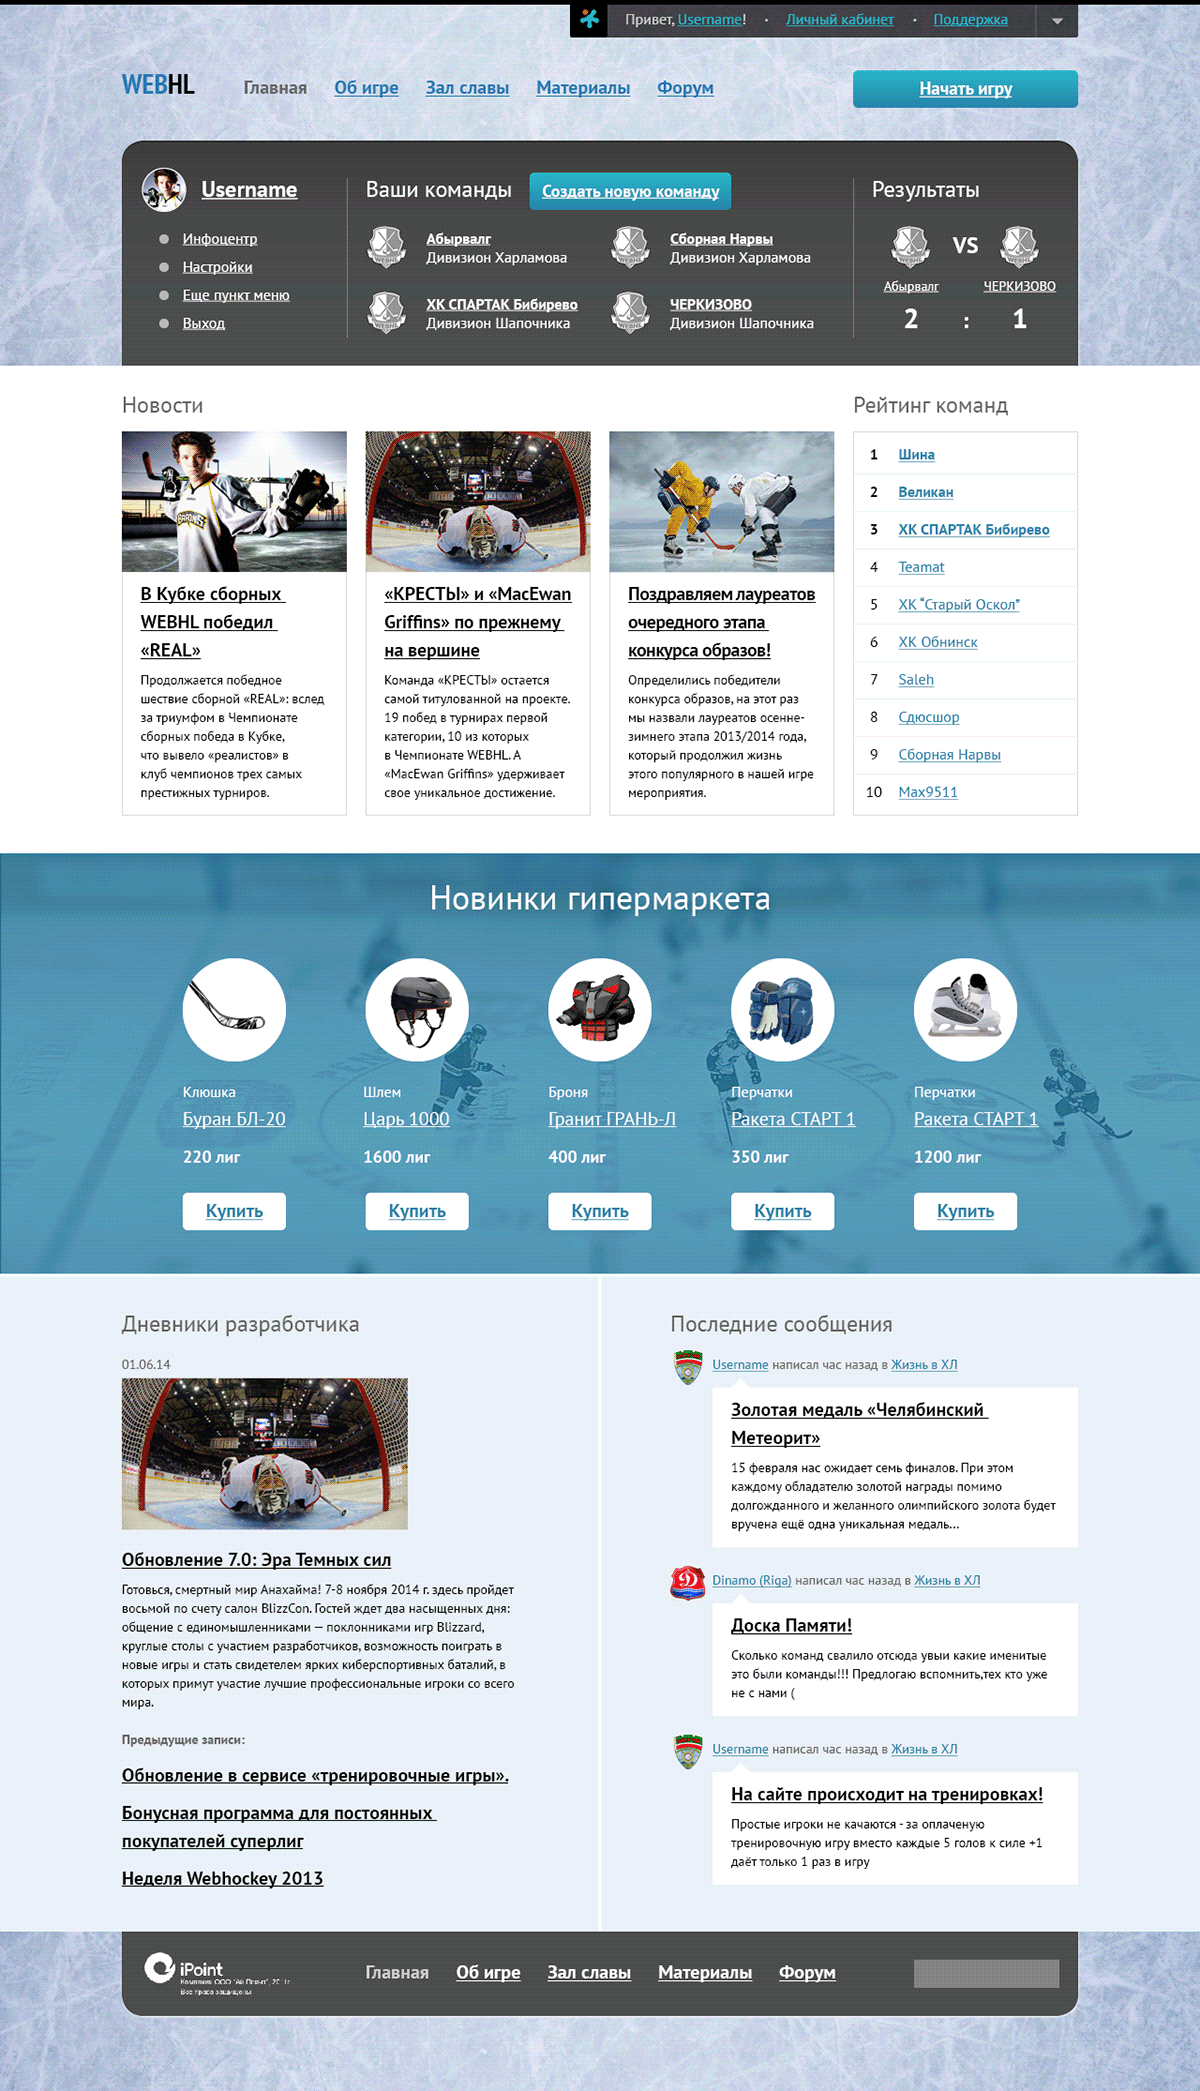 Website online gaming hockey sport